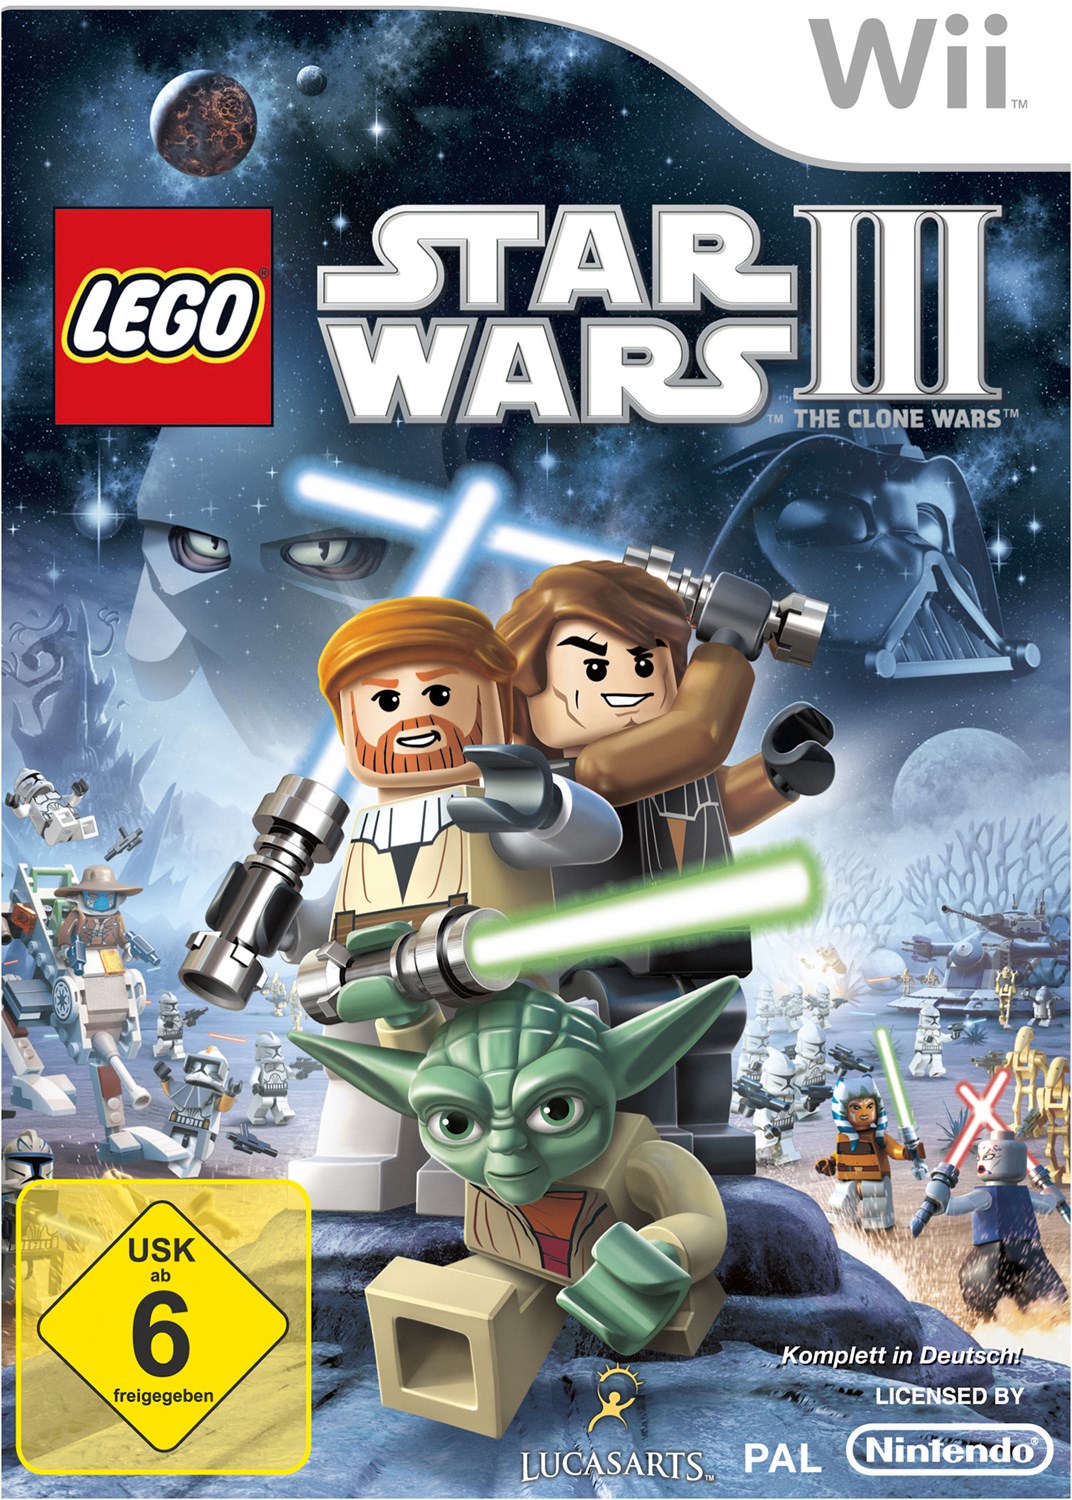 Software Pyramide Wii Lego Star Wars 3